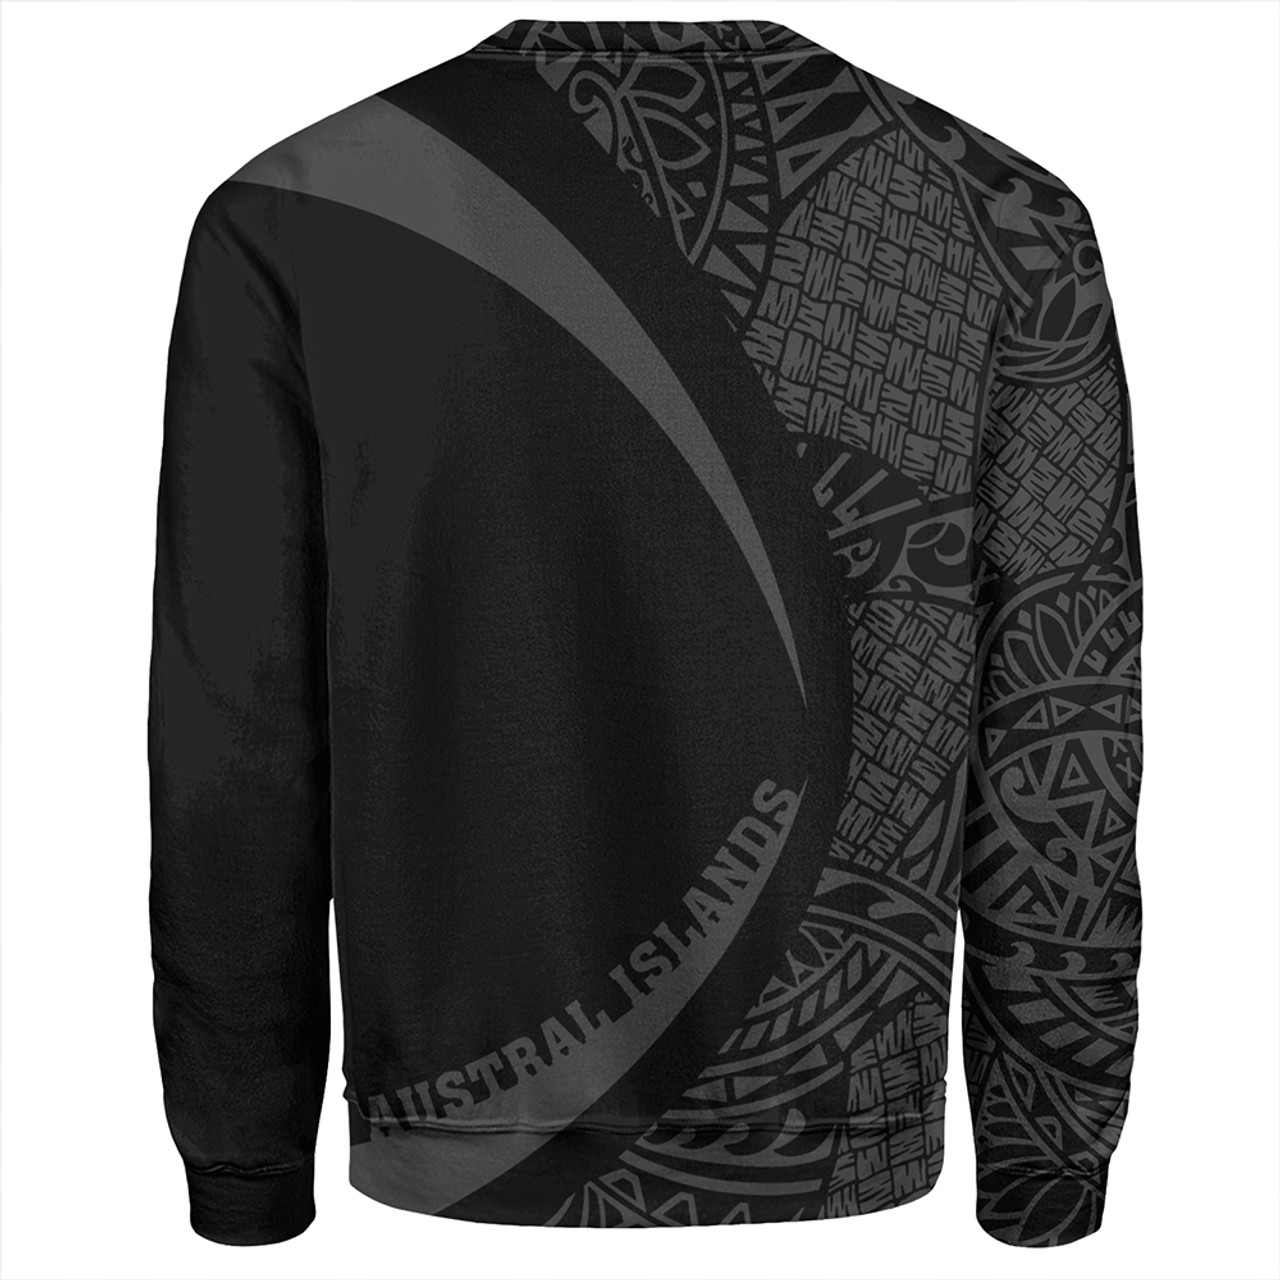 Austral Islands Sweatshirt Coat Of Arm Lauhala Gray Circle